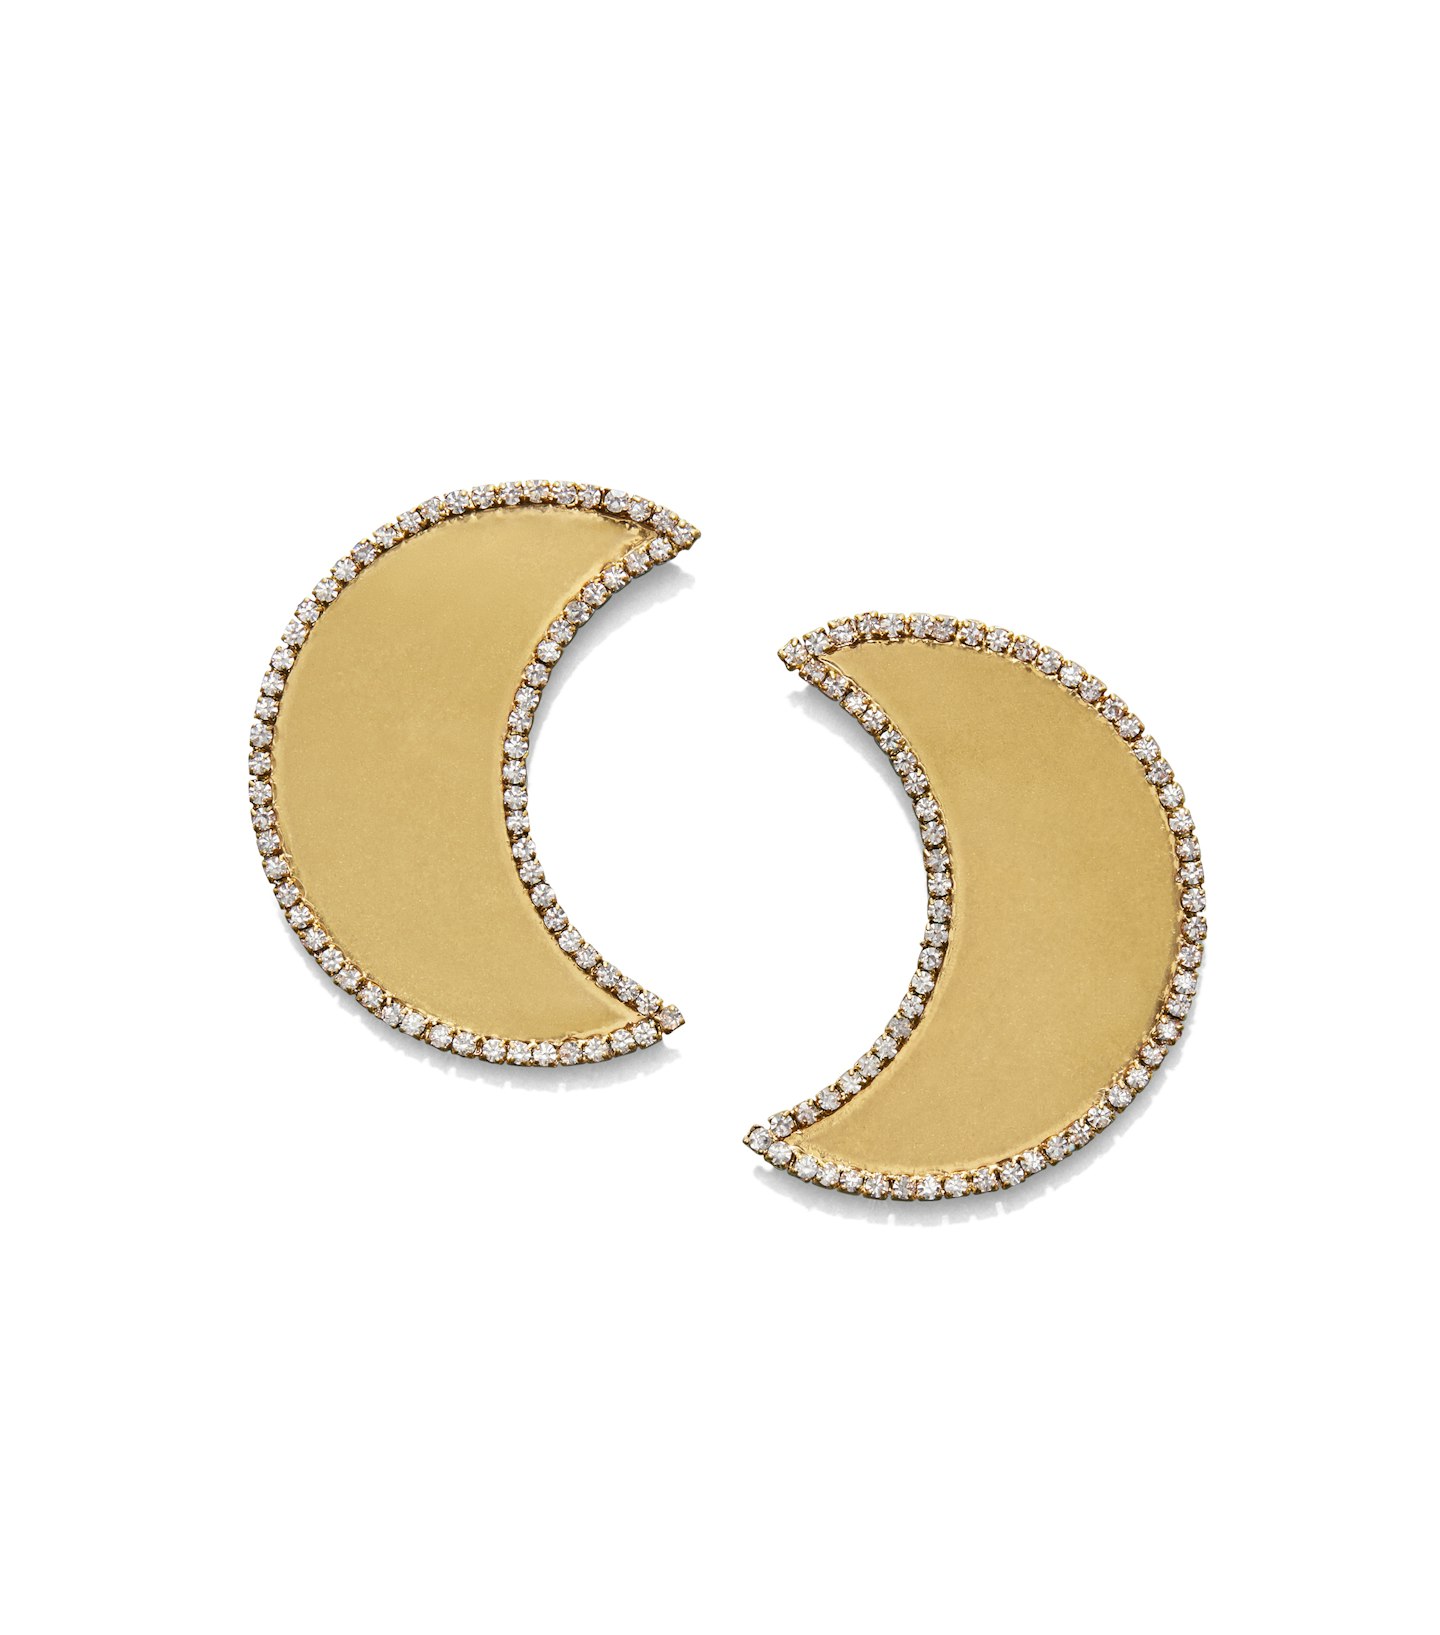 Celestial Crescent Moon Earrings, £165